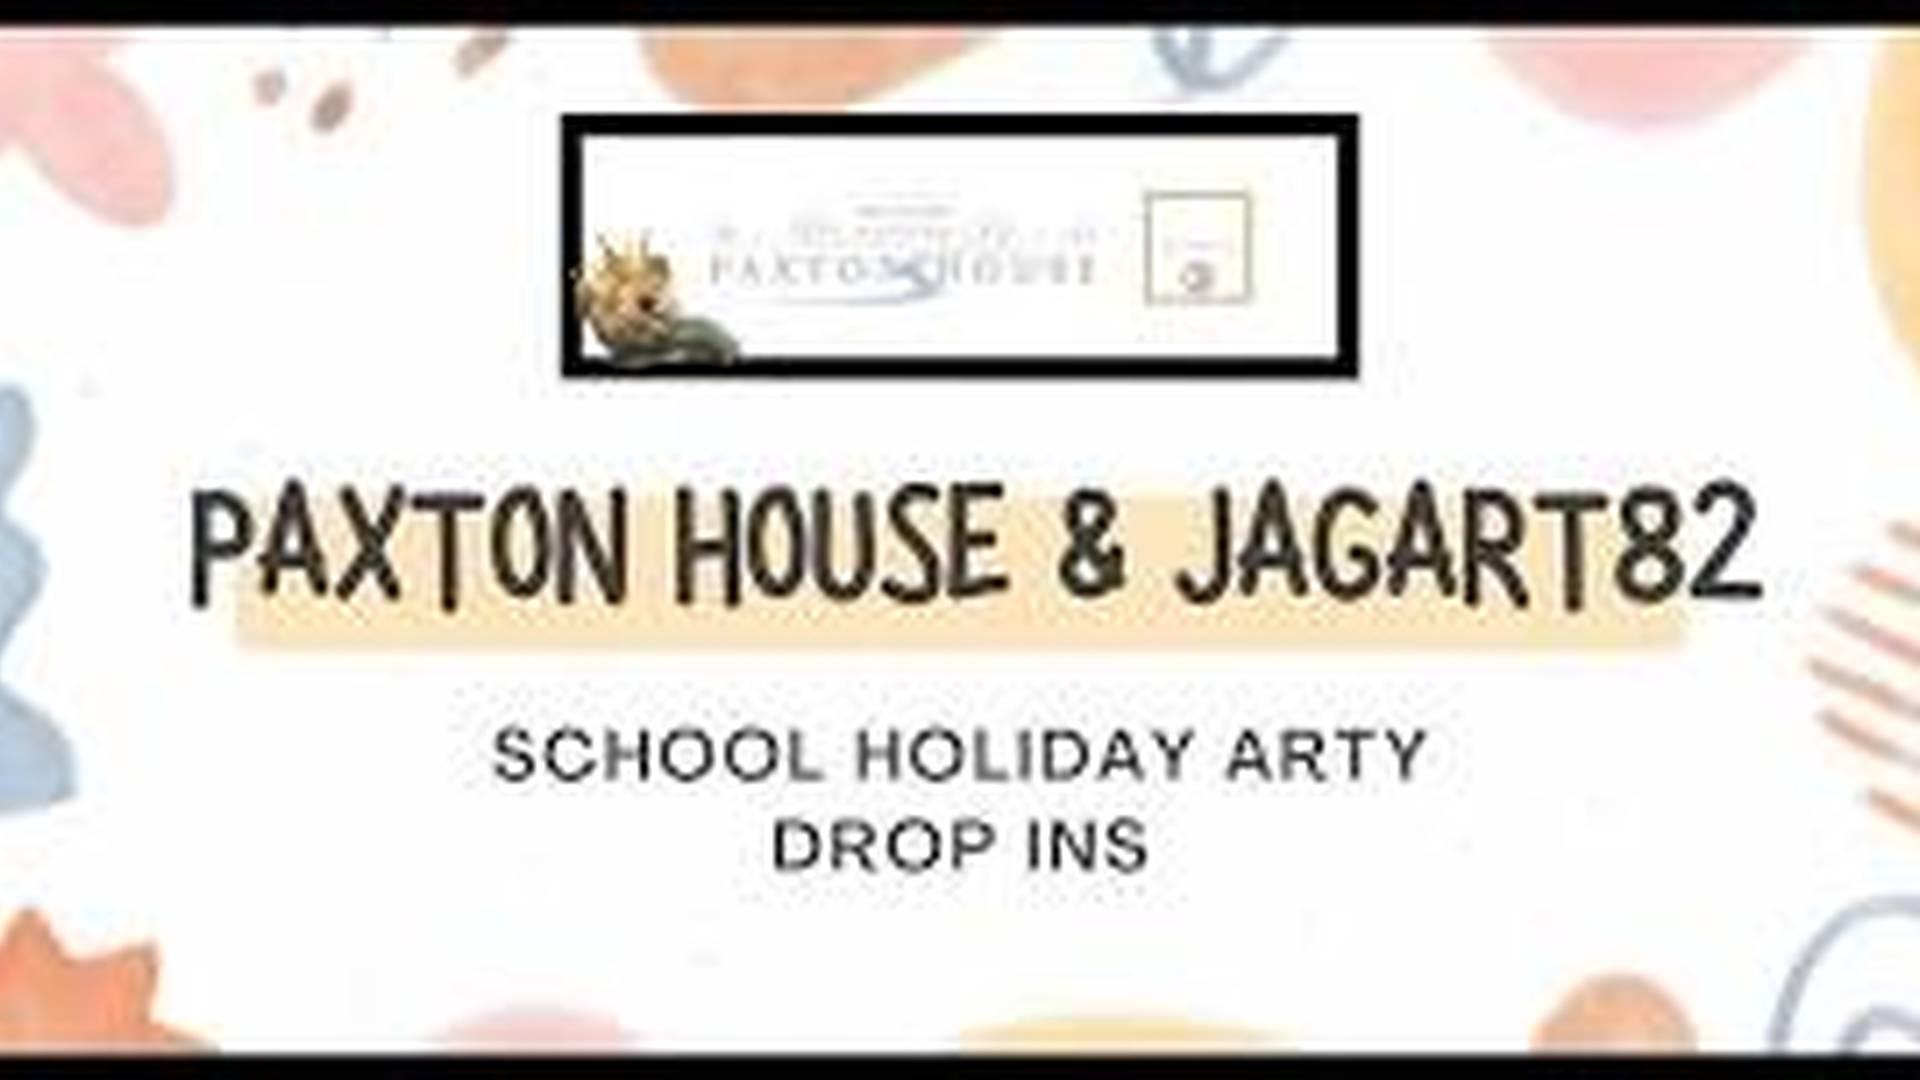 JAGART82 School Holiday Arty Drop Ins photo